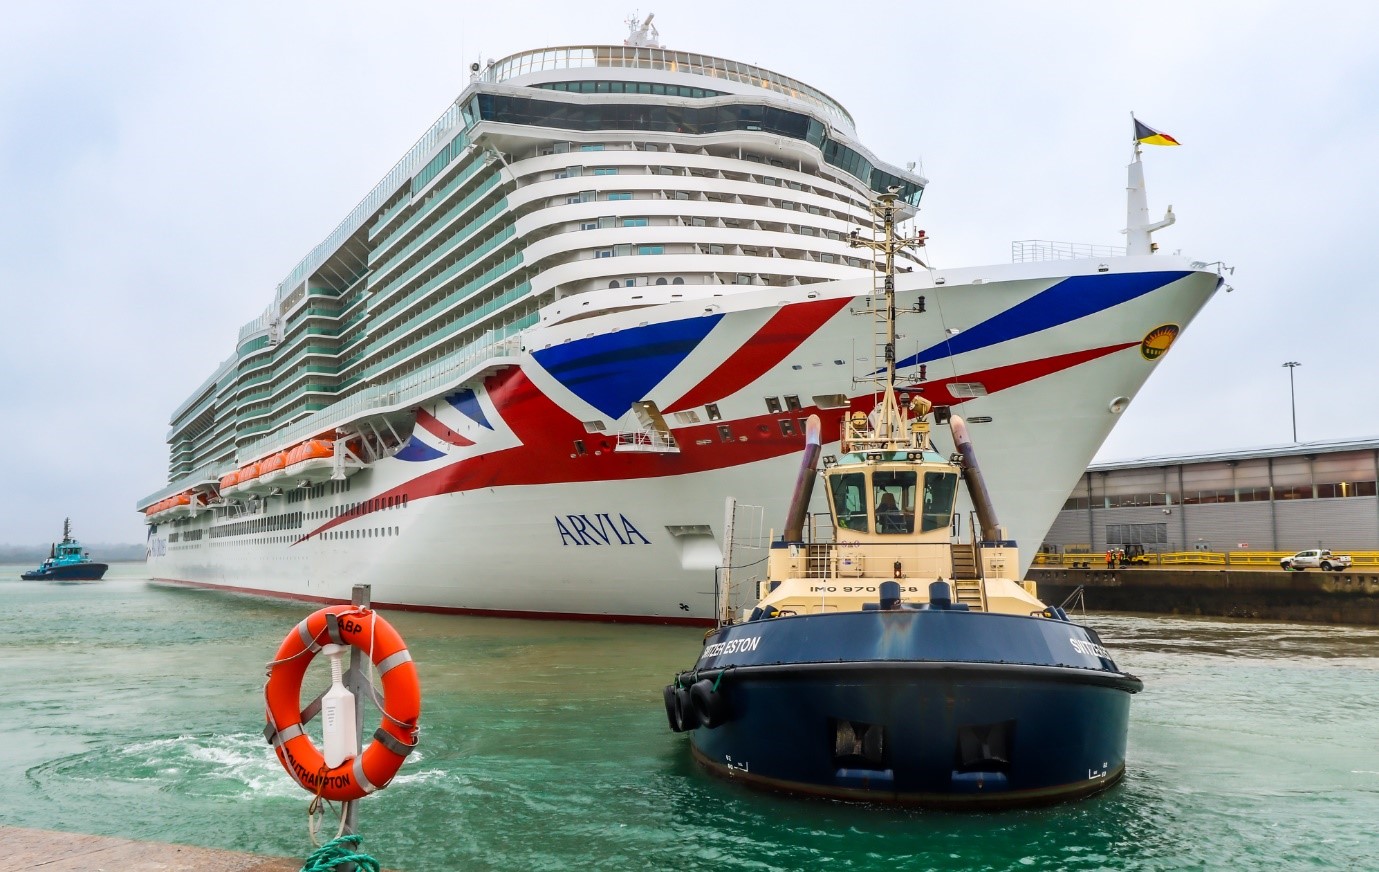 Port of Southampton welcomes P&O Cruises’ new ship Arvia